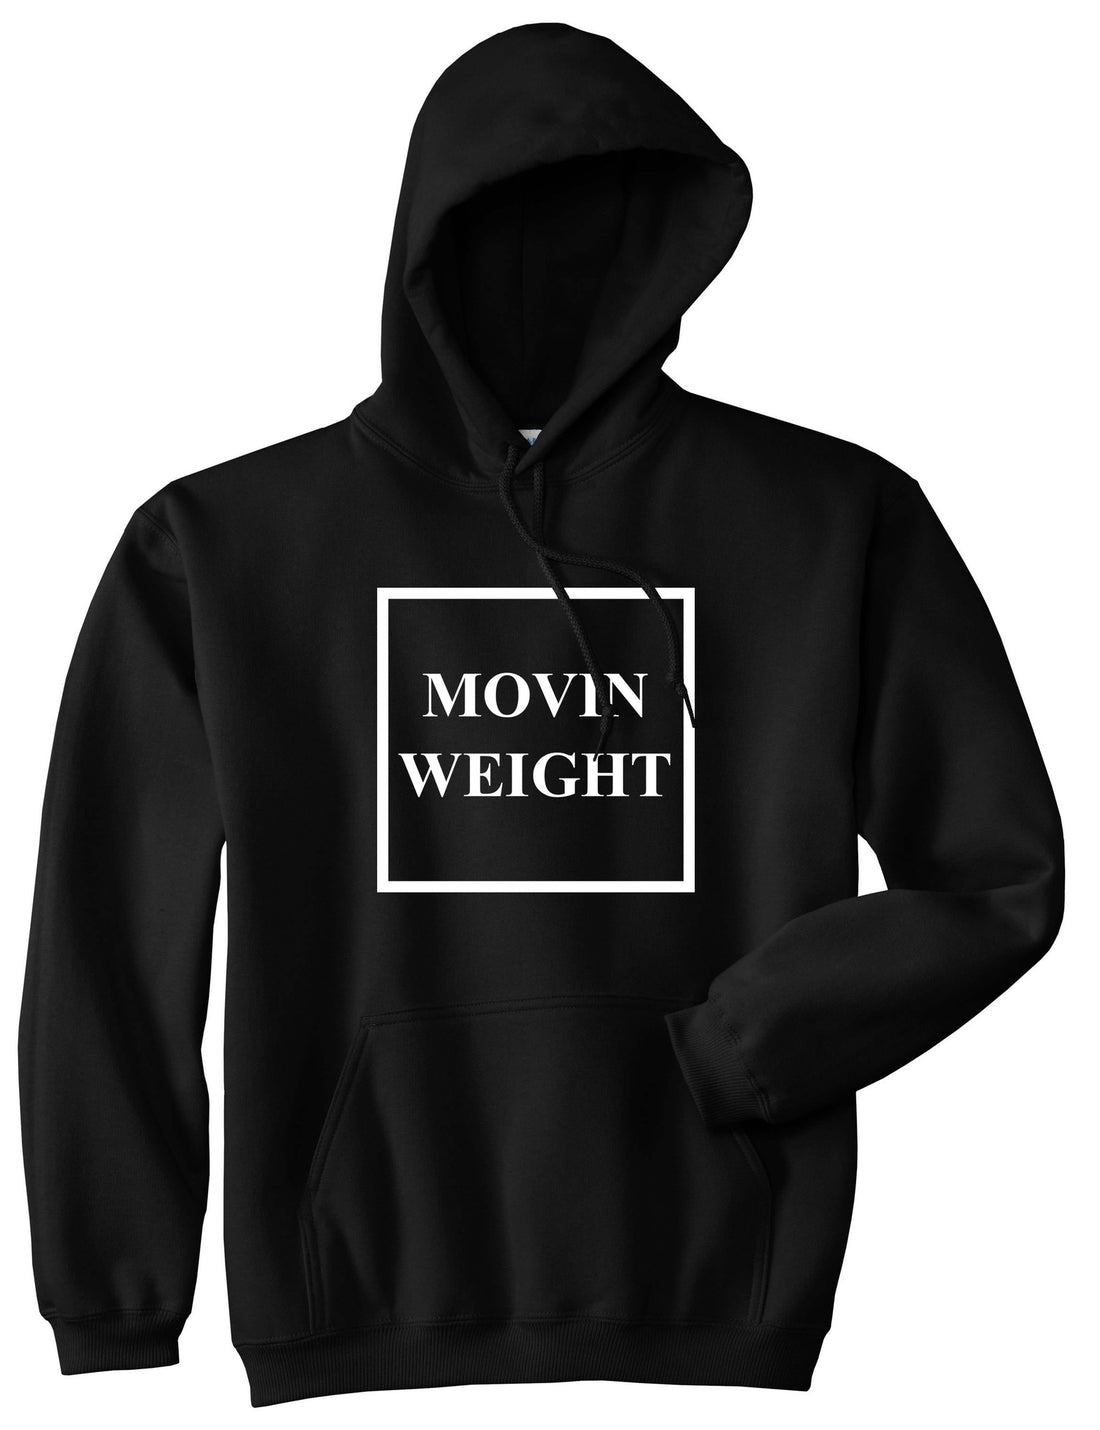 Movin Weight Hustler Boys Kids Pullover Hoodie Hoody in Black by Kings Of NY